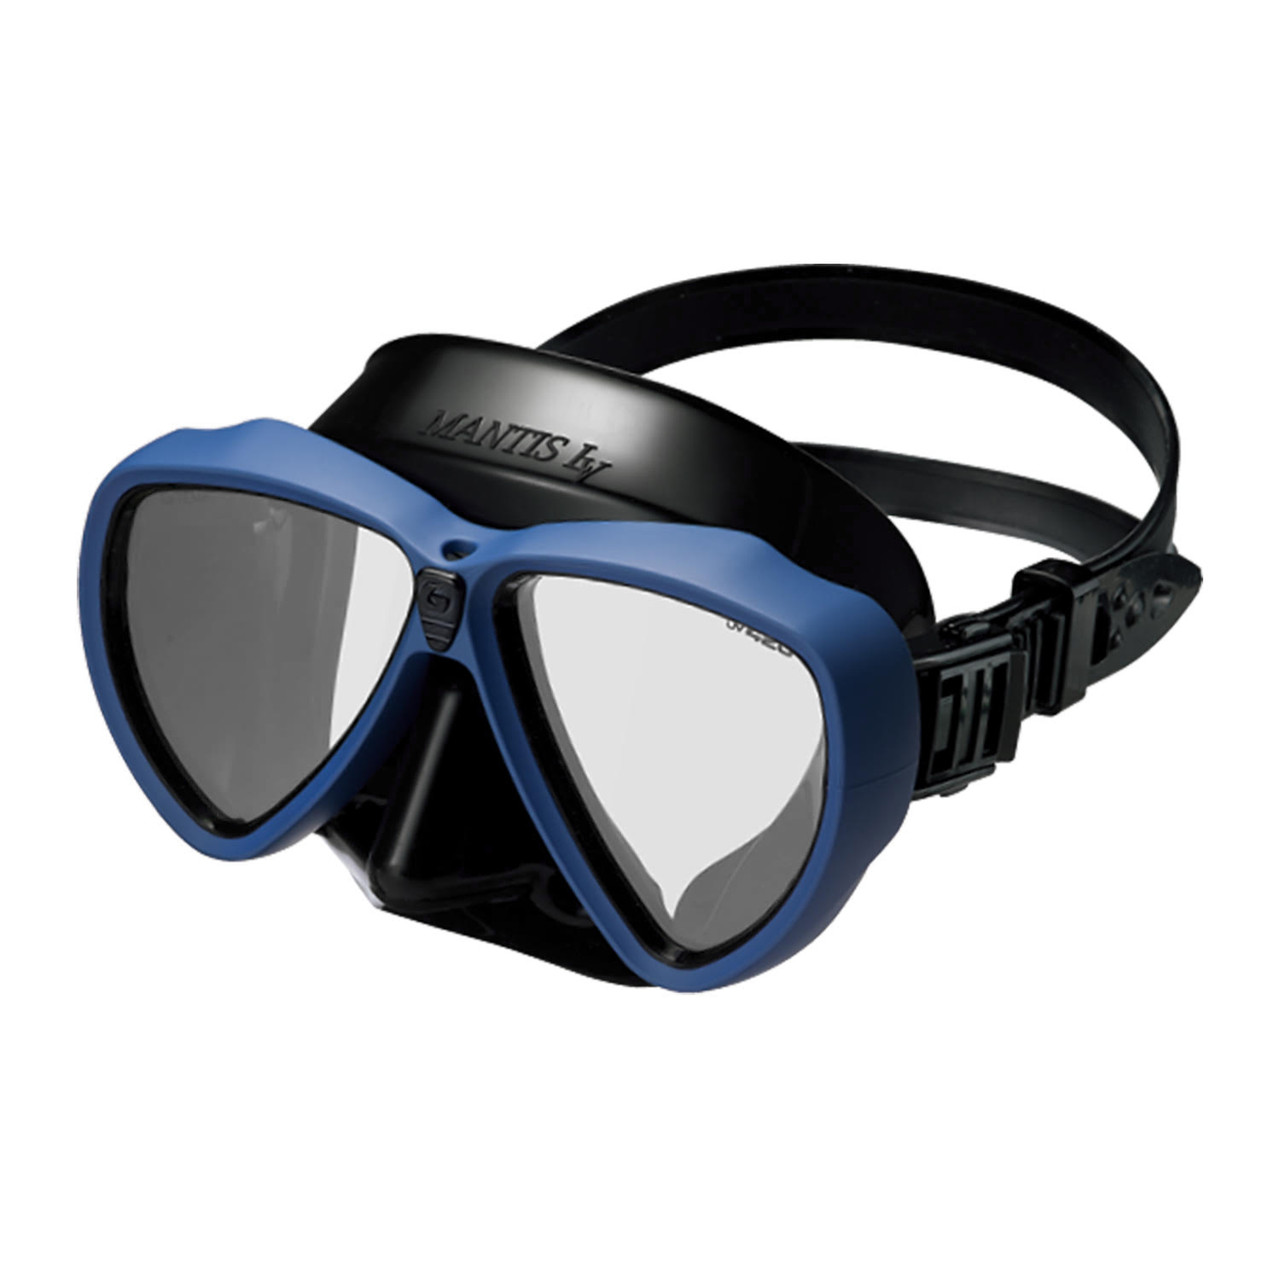 Gull Mantis LV RX Nearsighted Black/Capri Blue Dive Mask, RX-7.0